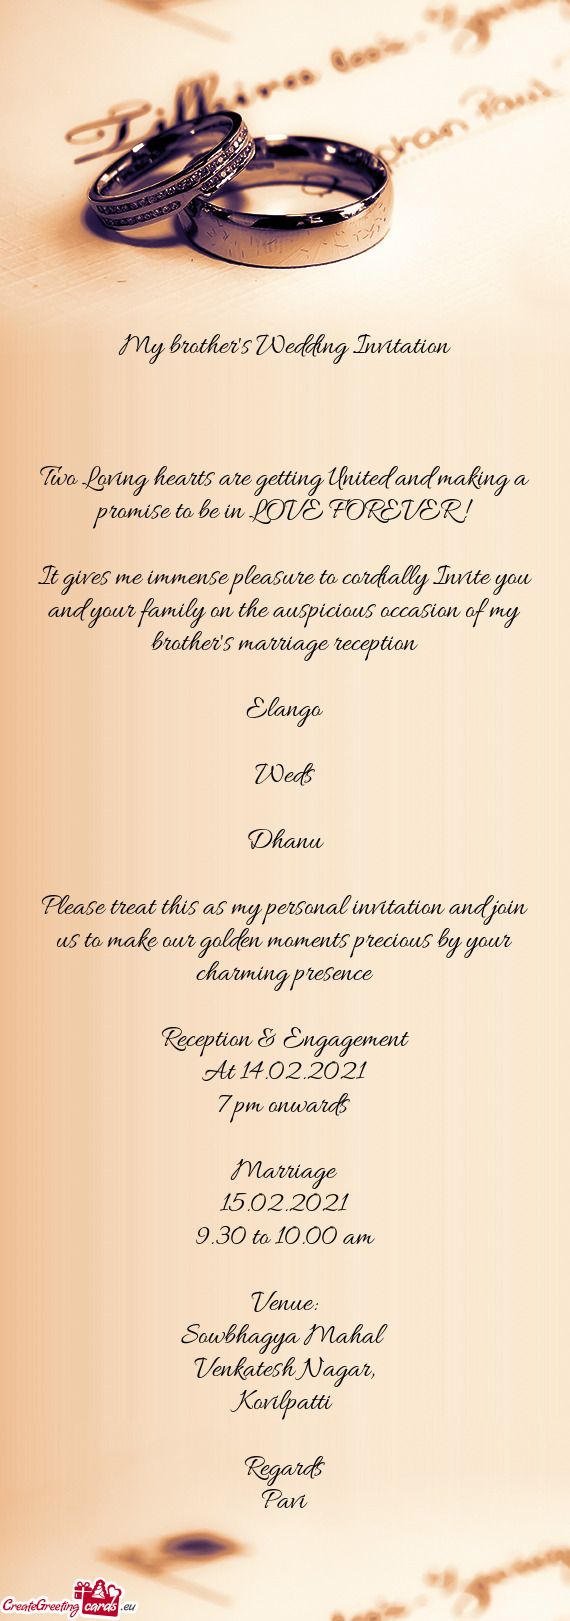 Reception & Engagement